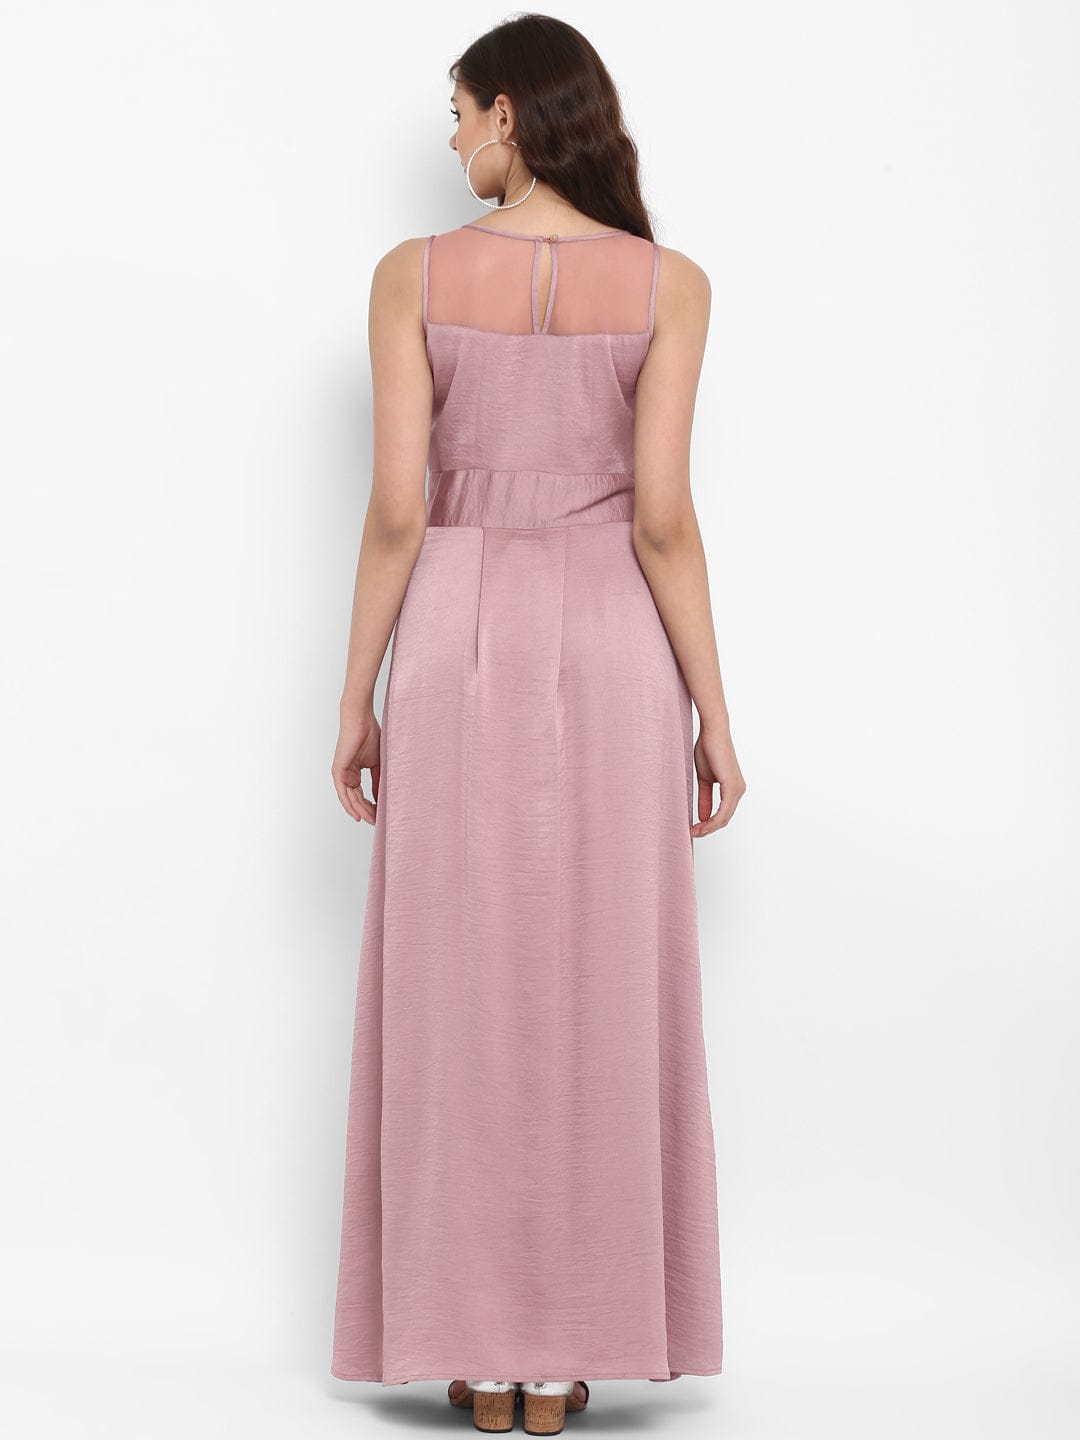 Buy Eavan Kids Pink Self Gown for Girls Clothing Online @ Tata CLiQ